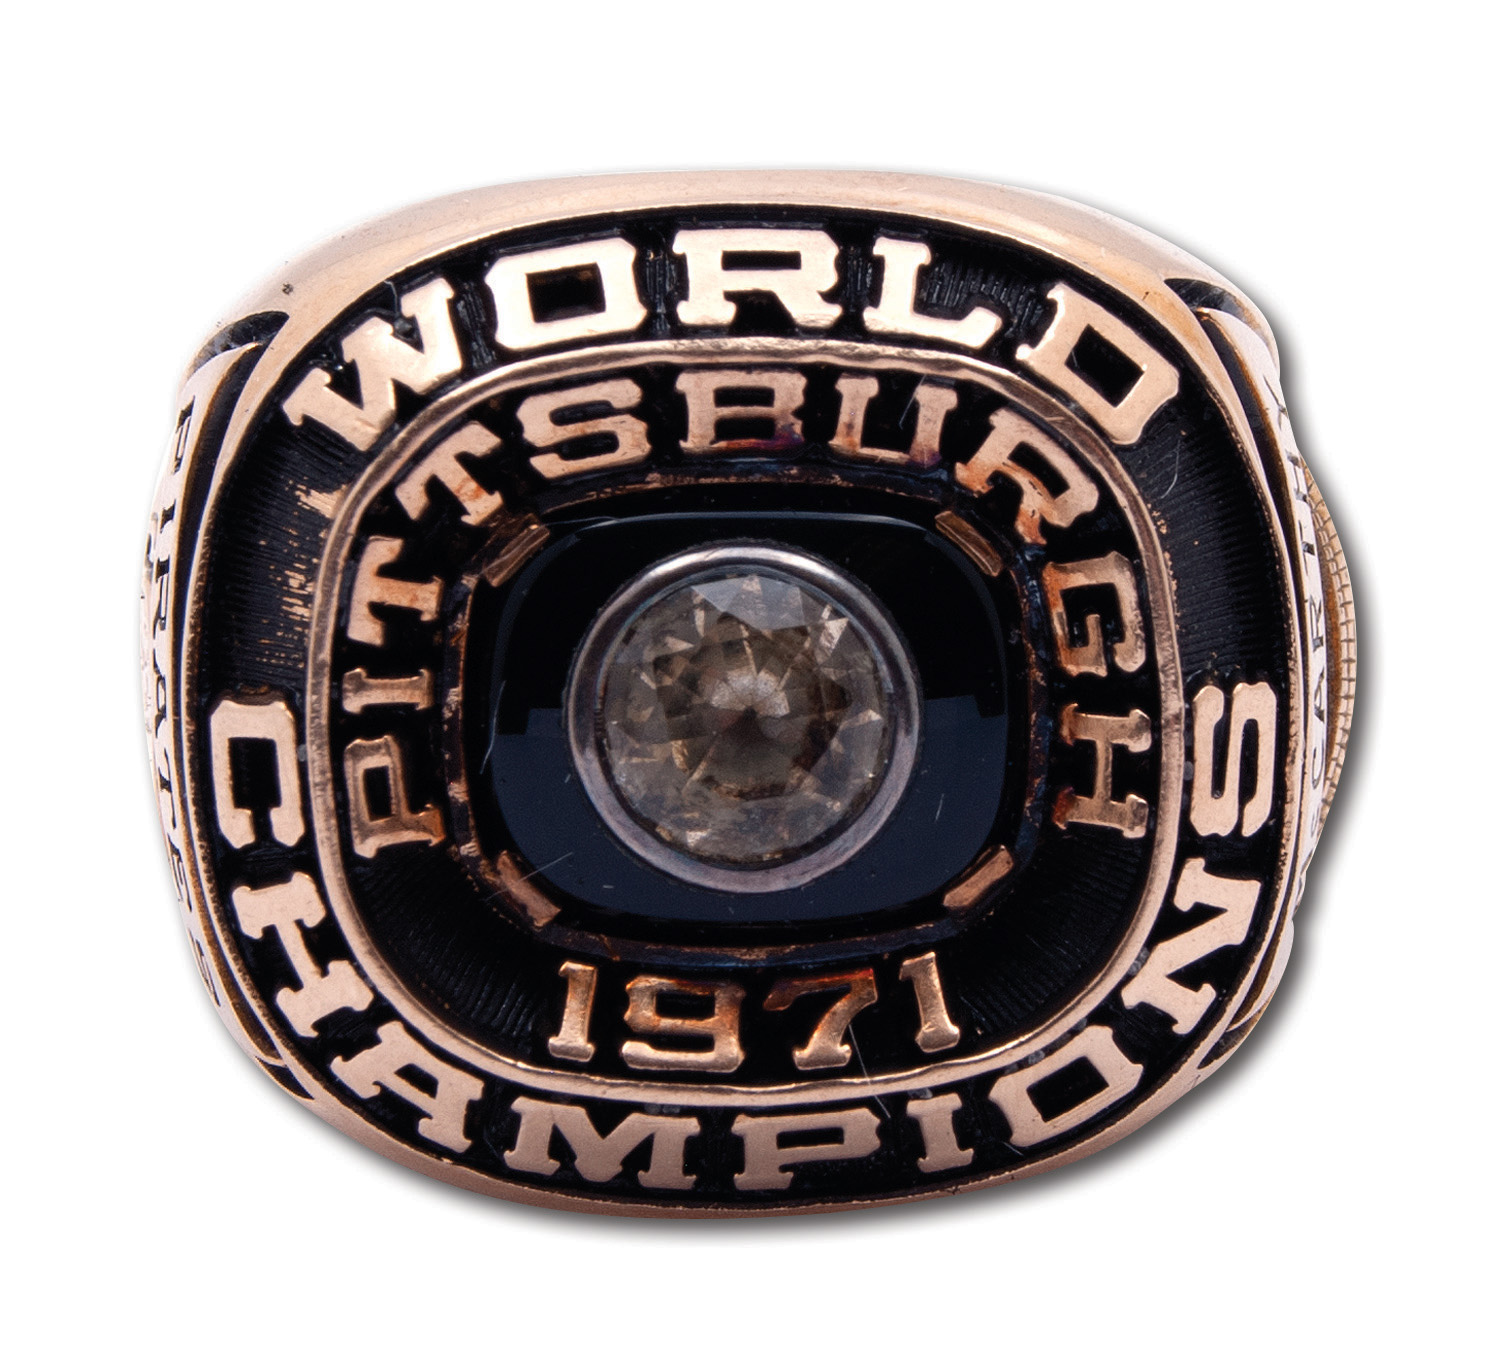 The 1971 World Series Champions - Pittsburgh Pirates